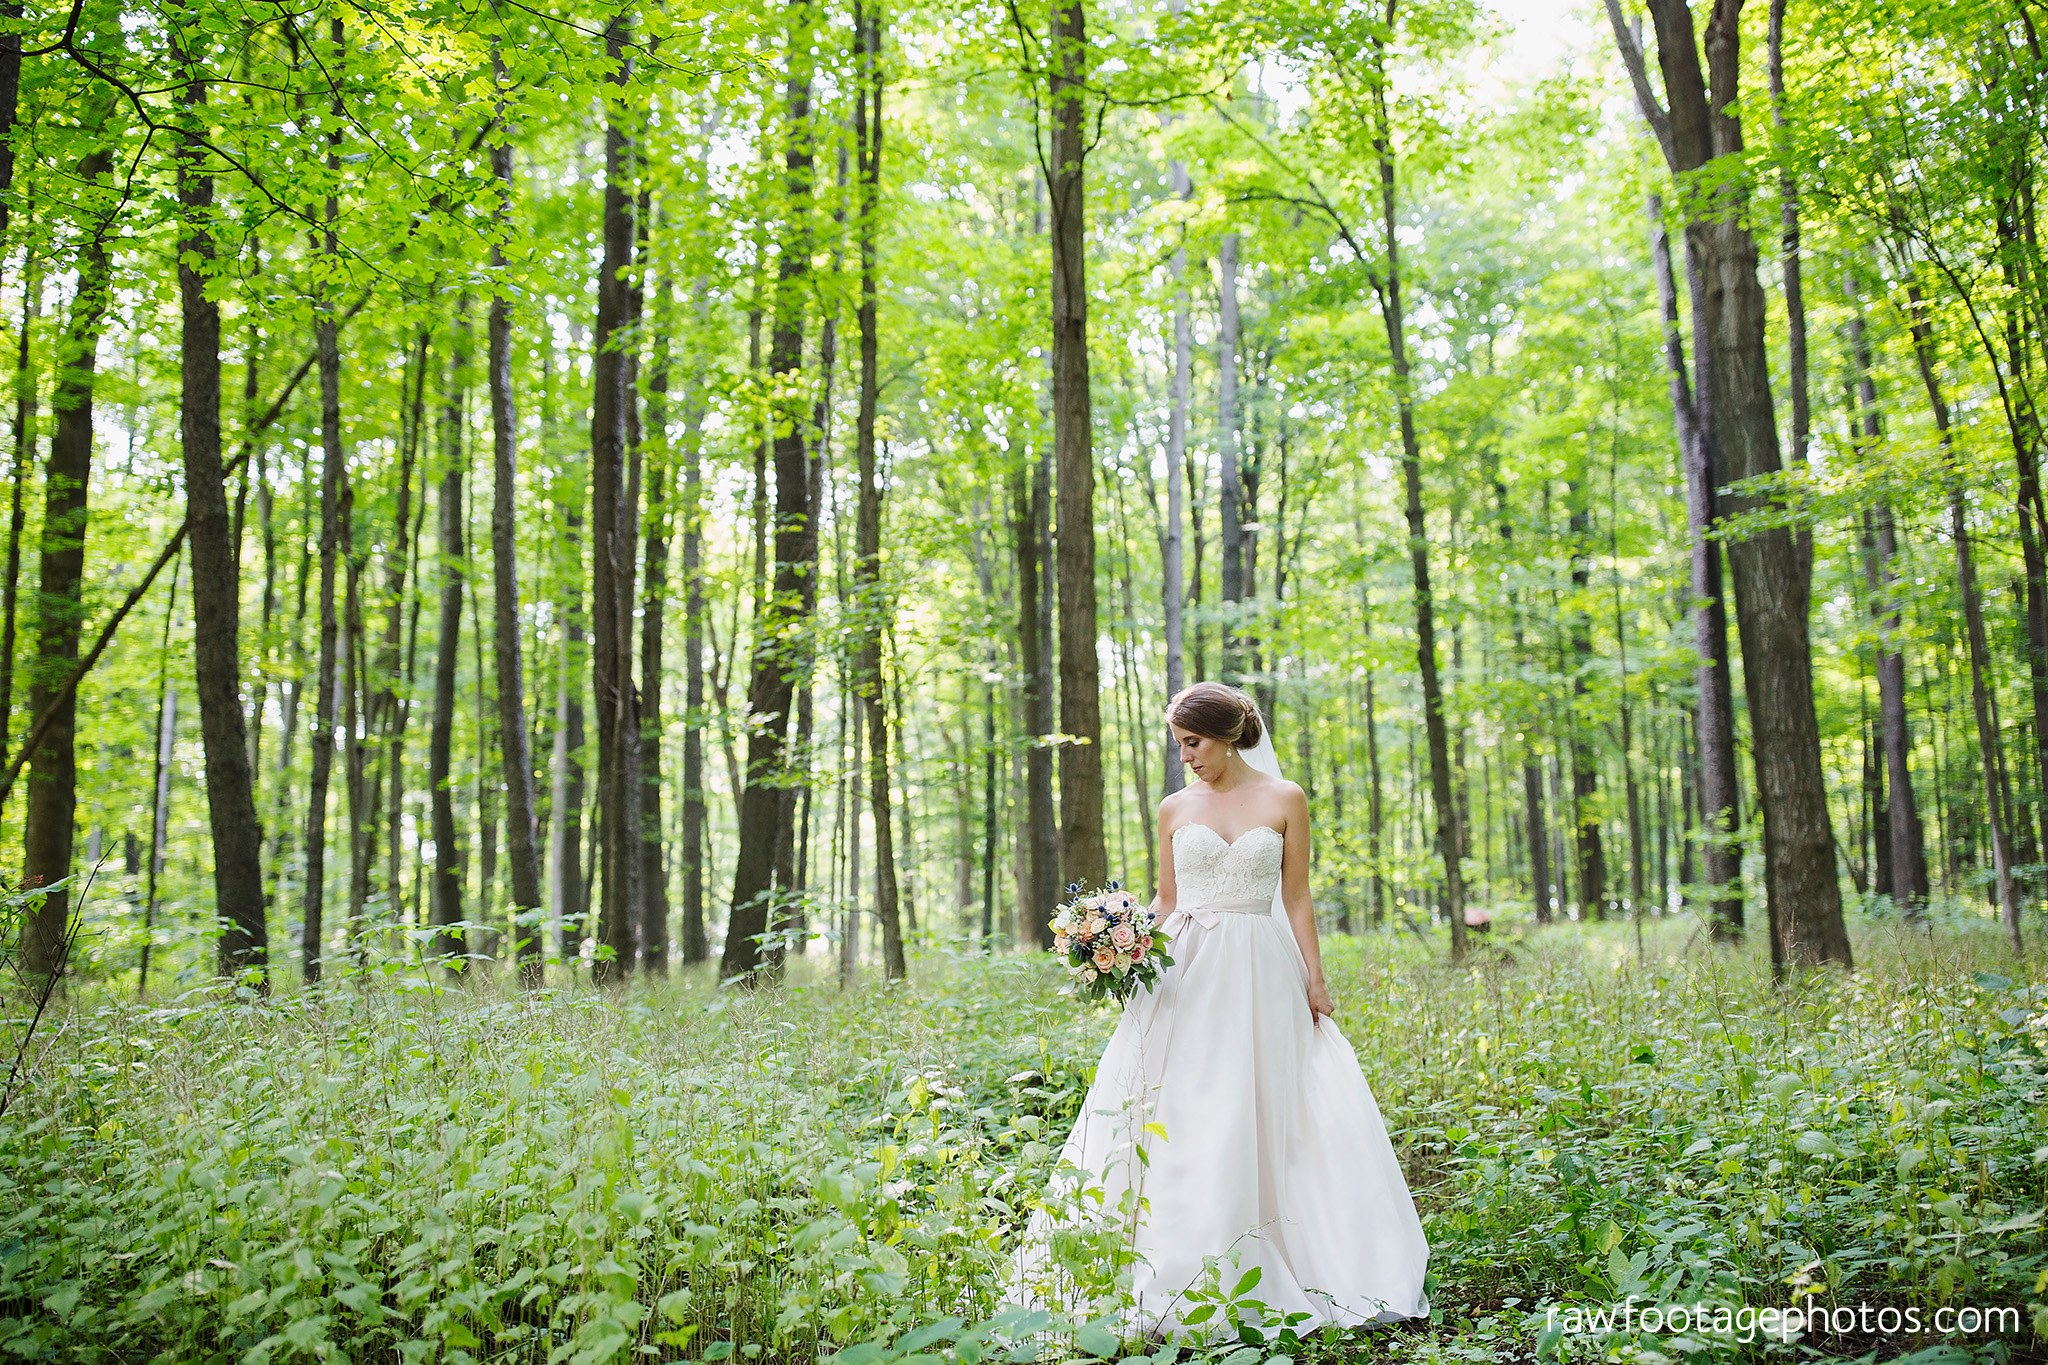 London_Ontario_Wedding_Photographer-Raw_Footage_photography-Forest_wedding-Woodsy_wedding-DIY_Wedding-Candid_Wedding_Photography067.jpg